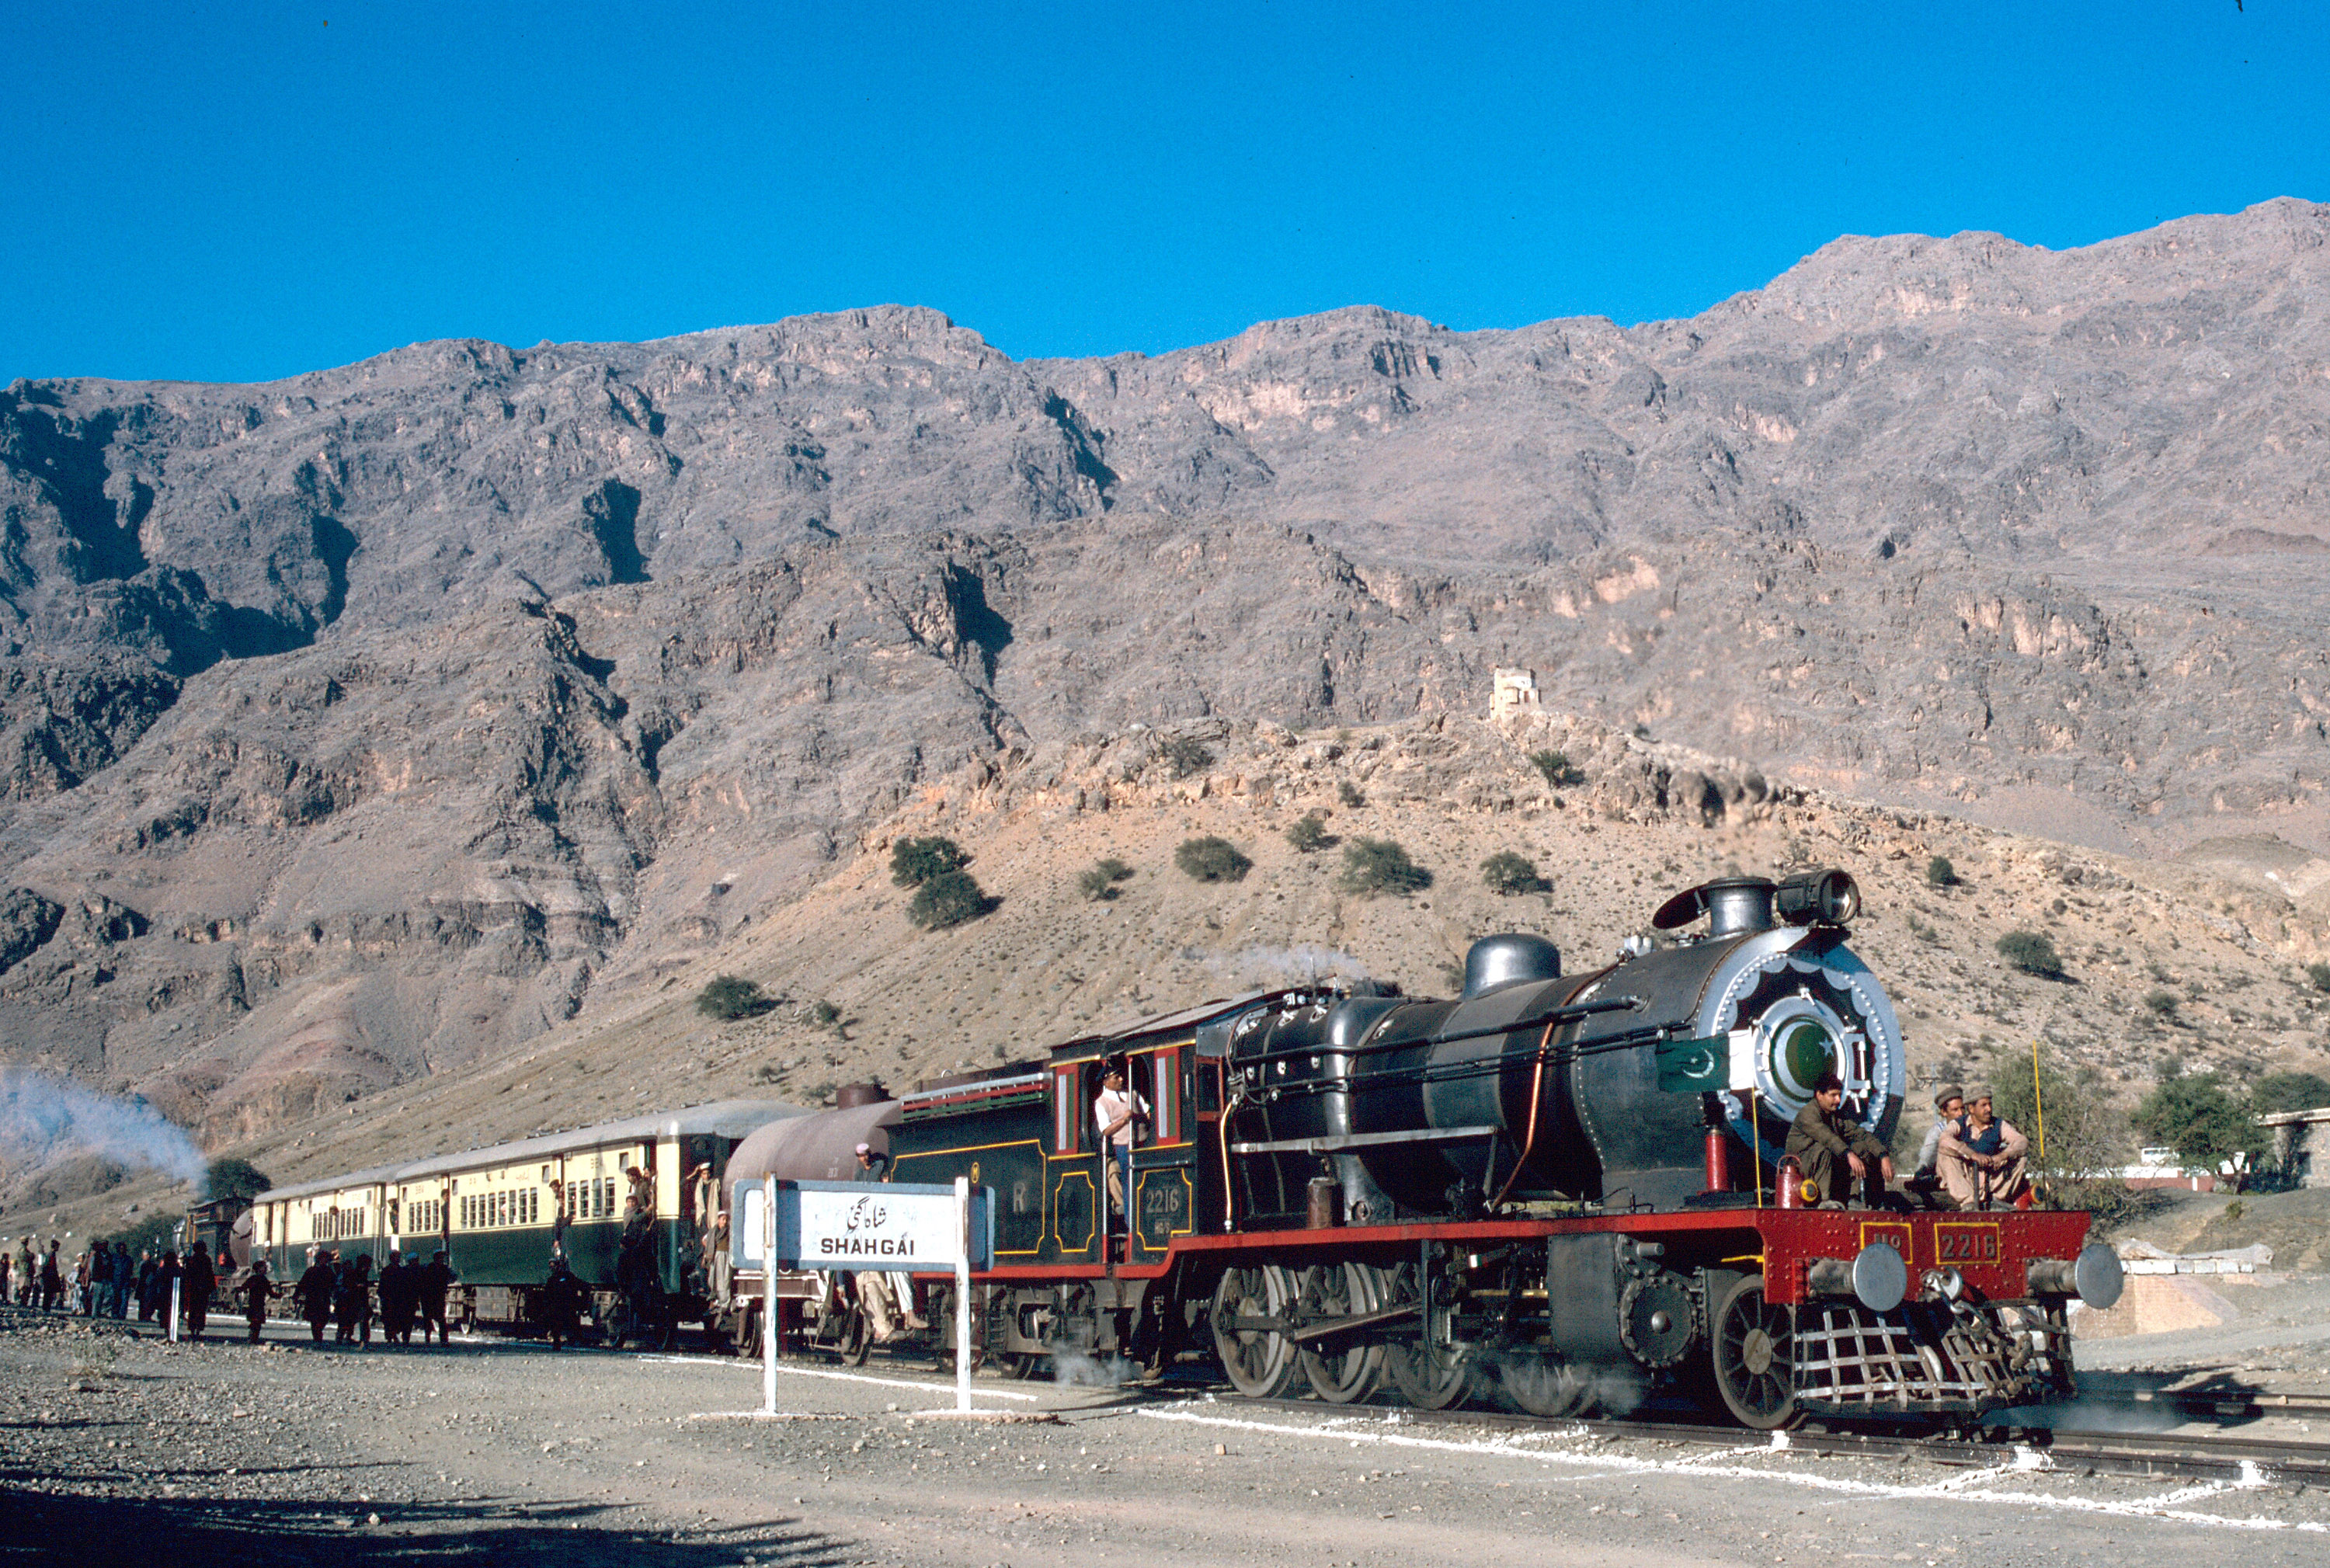 Khyber train safari - Wikipedia